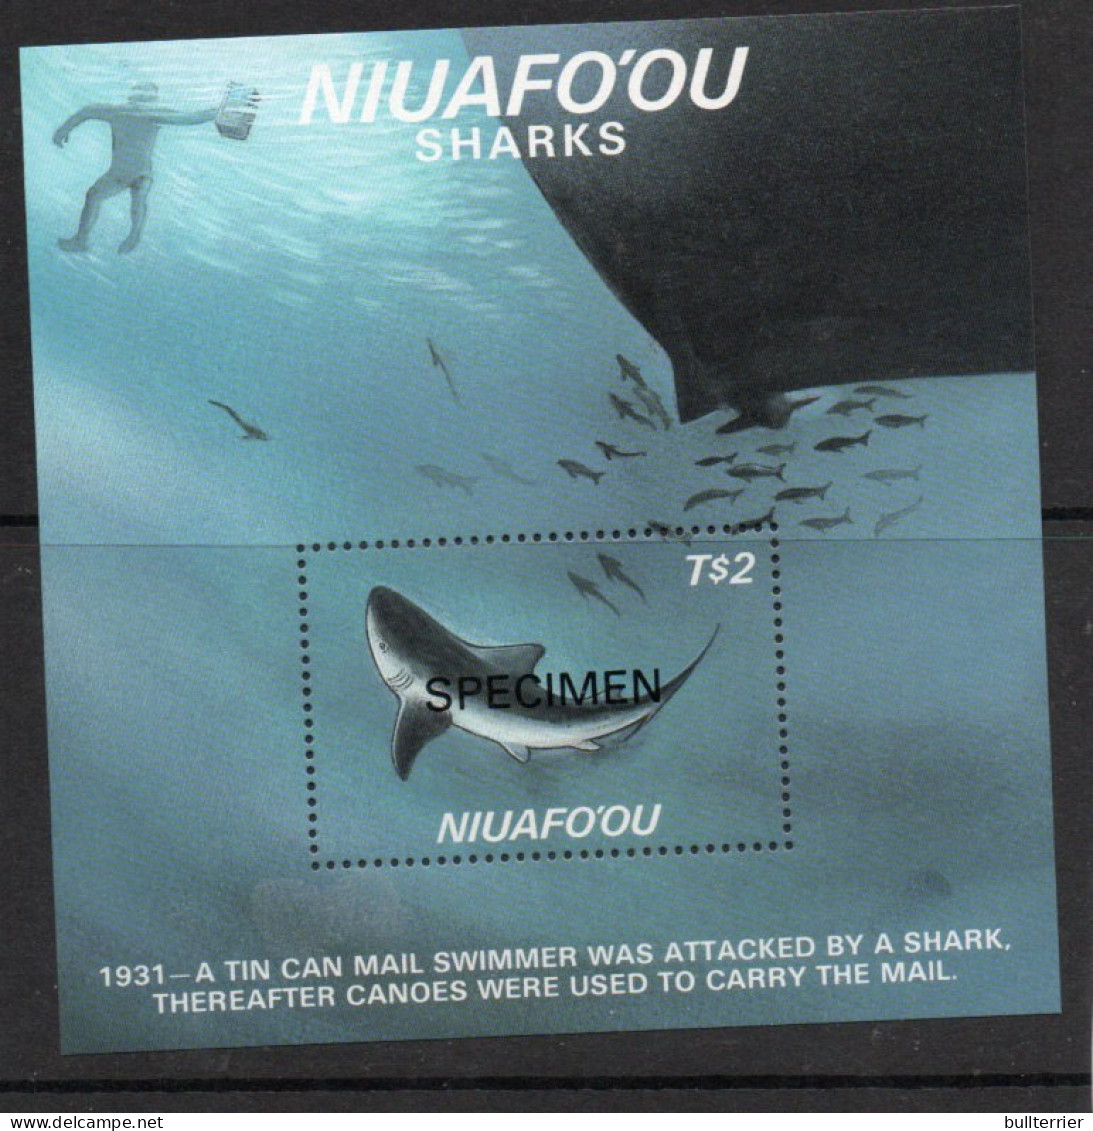 NIUAFOOU - 1987 - SHARKS SOUVENIR SHEET   " SPECIMENS"  MINT NEVER HINGED  - Oceania (Other)